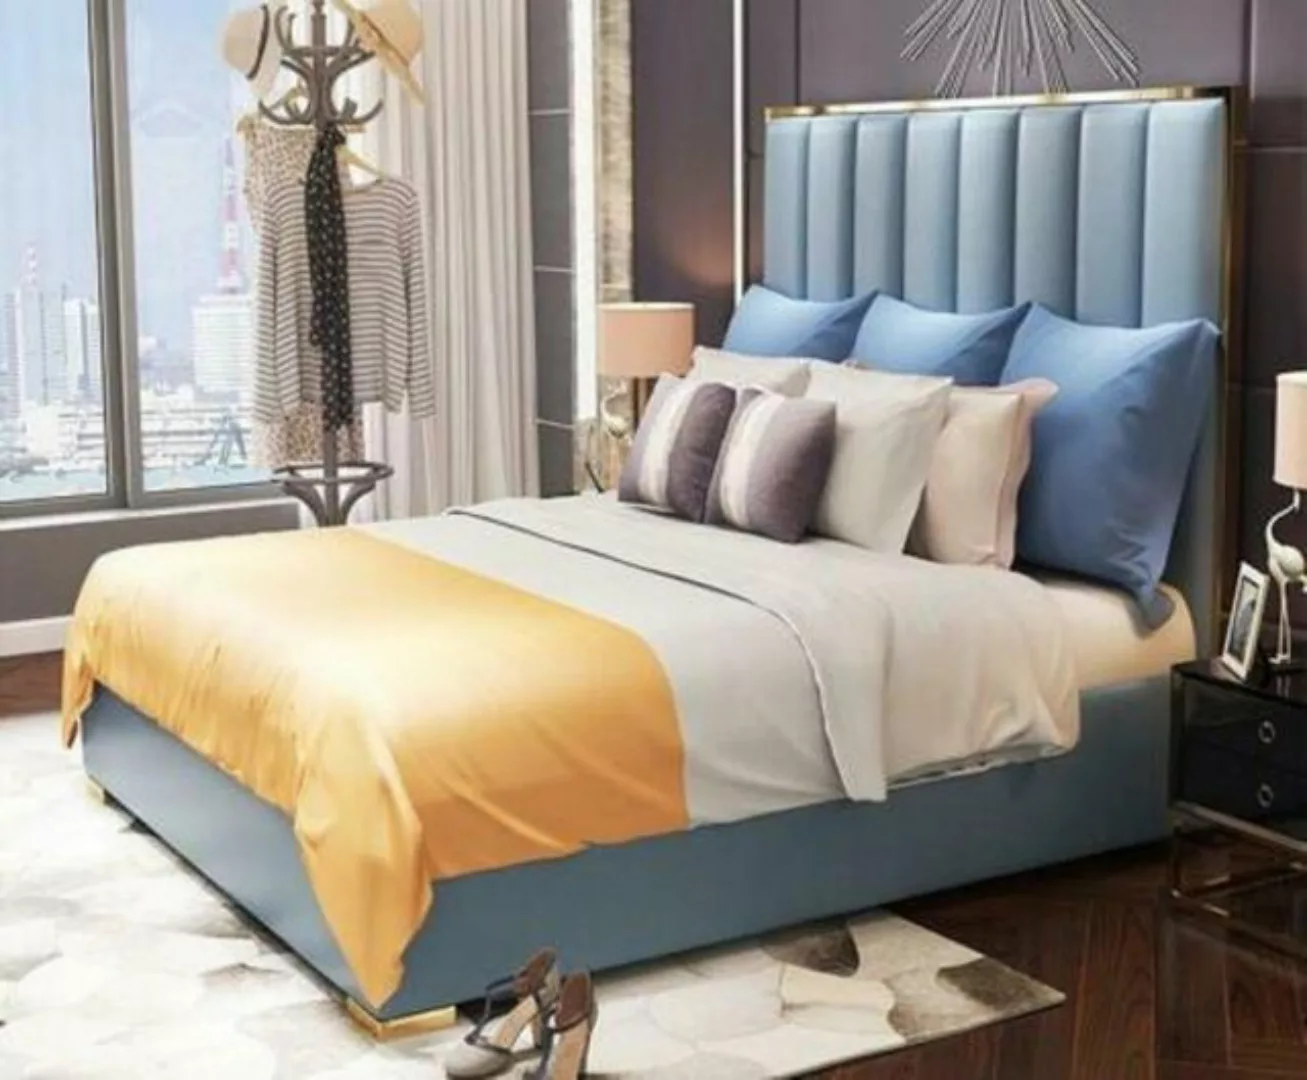 JVmoebel Lederbett, Bett Polster Design Luxus Doppel Betten Beige180x200cm günstig online kaufen